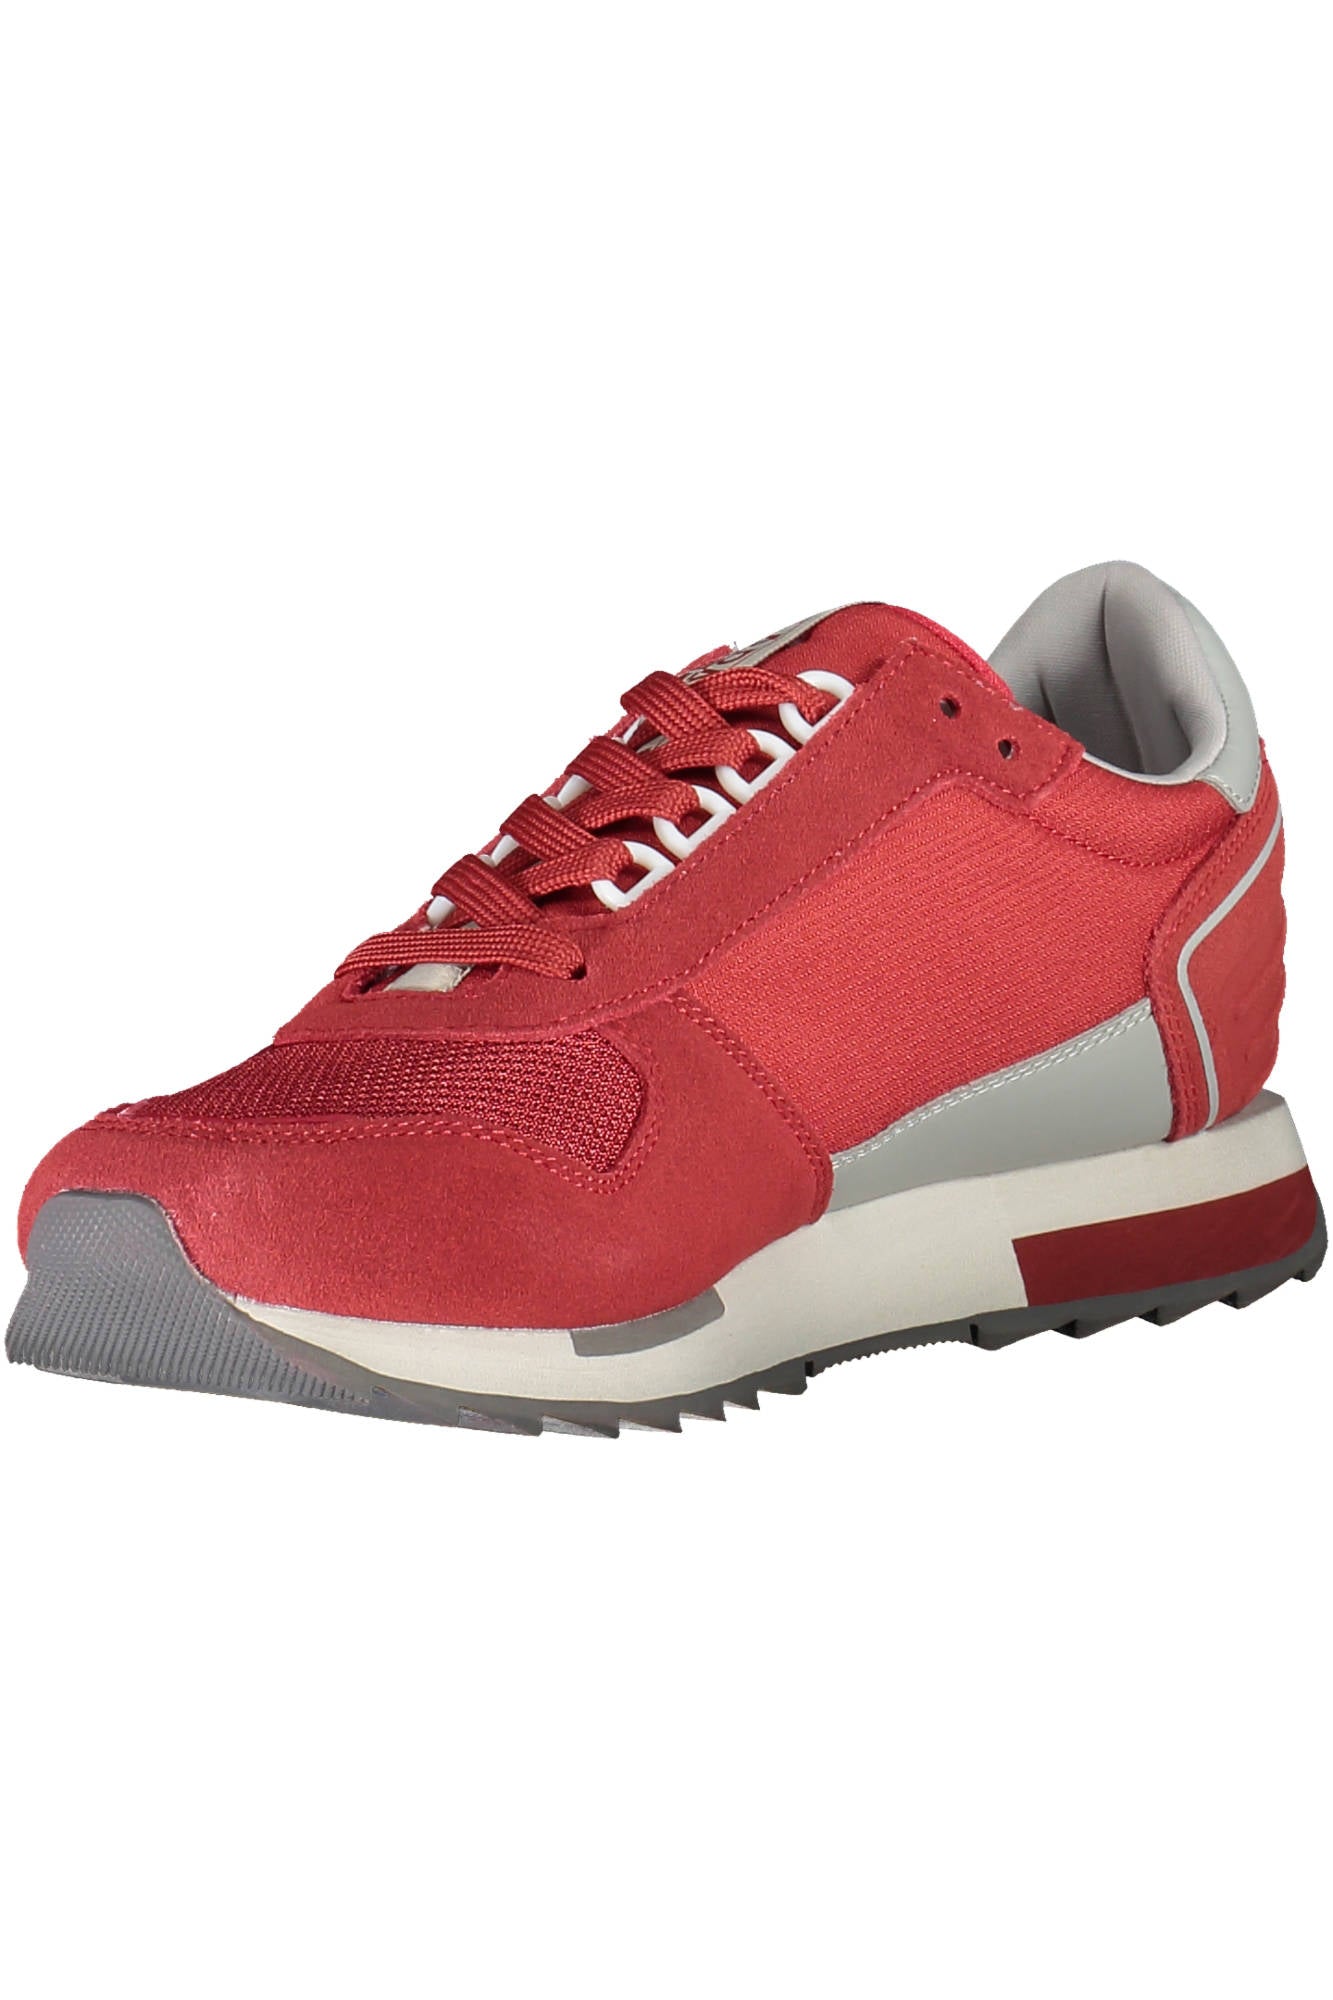 Napapijri Red Sneakers - Fizigo